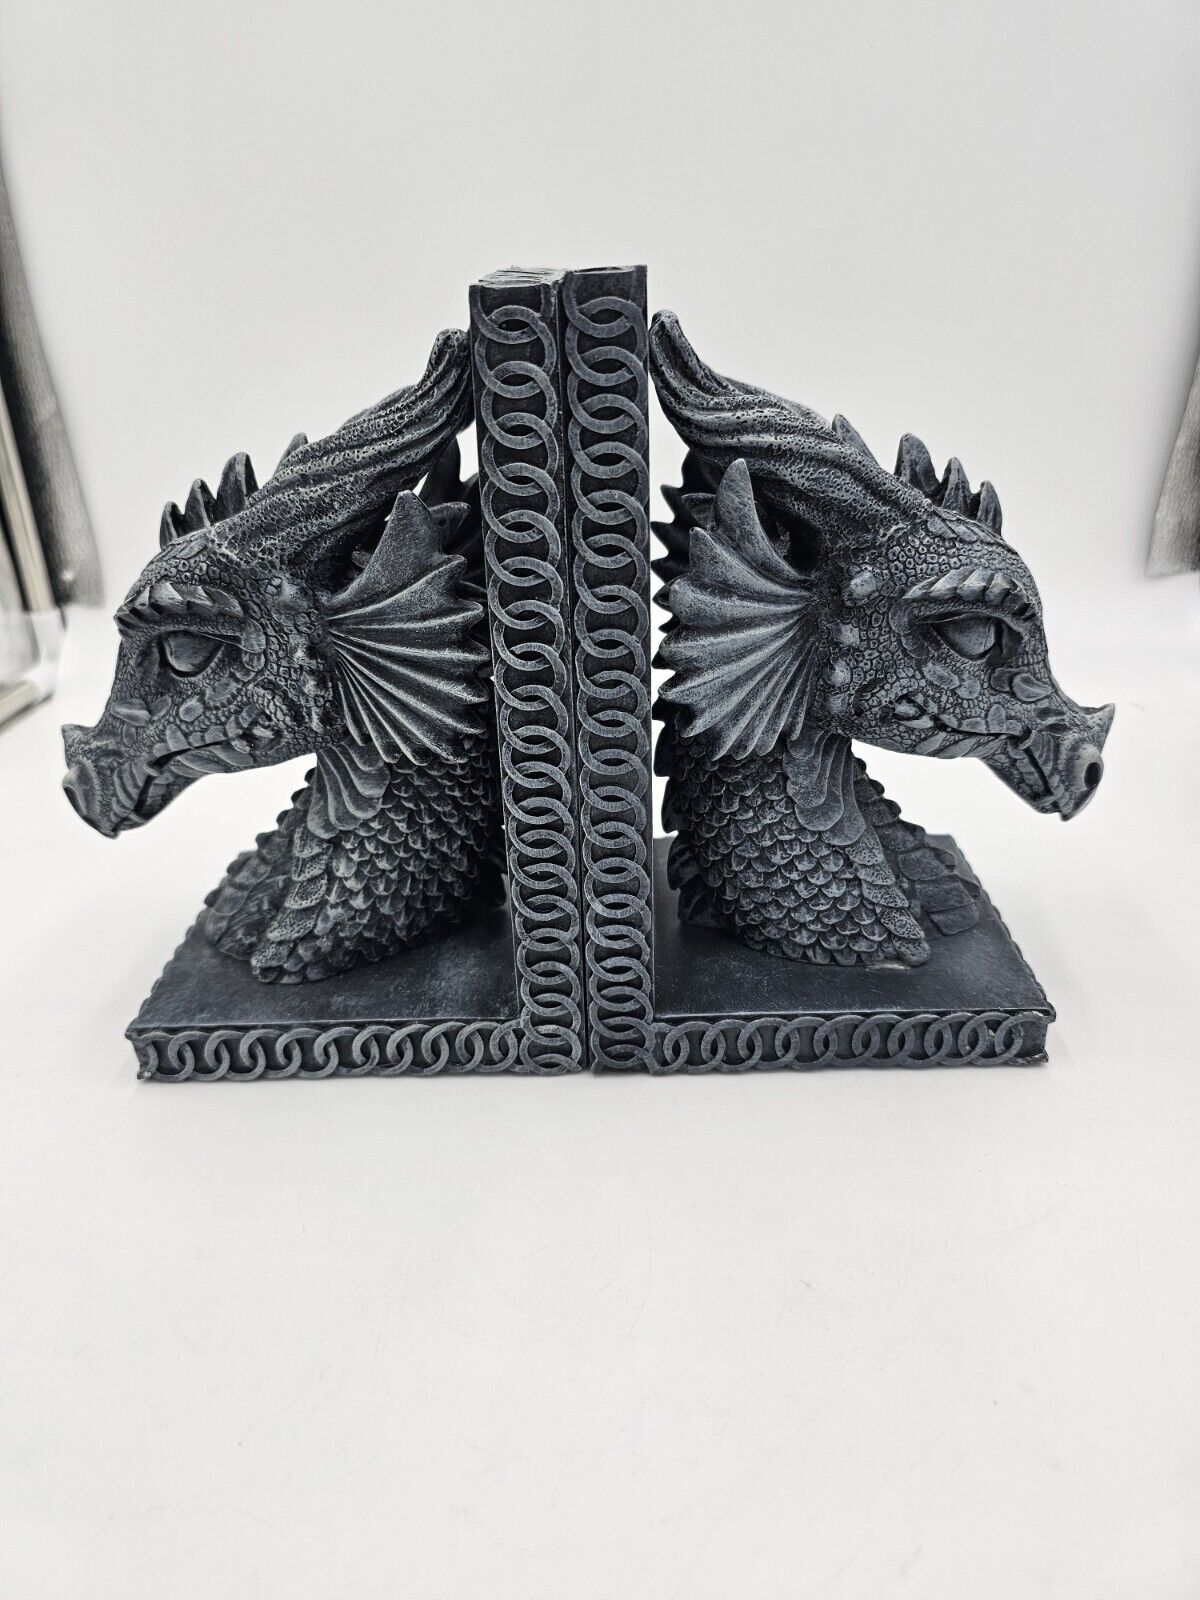 Fierce Dragon Head Bookends Medieval Fantasy Home Decor Figurine, Superb Detail